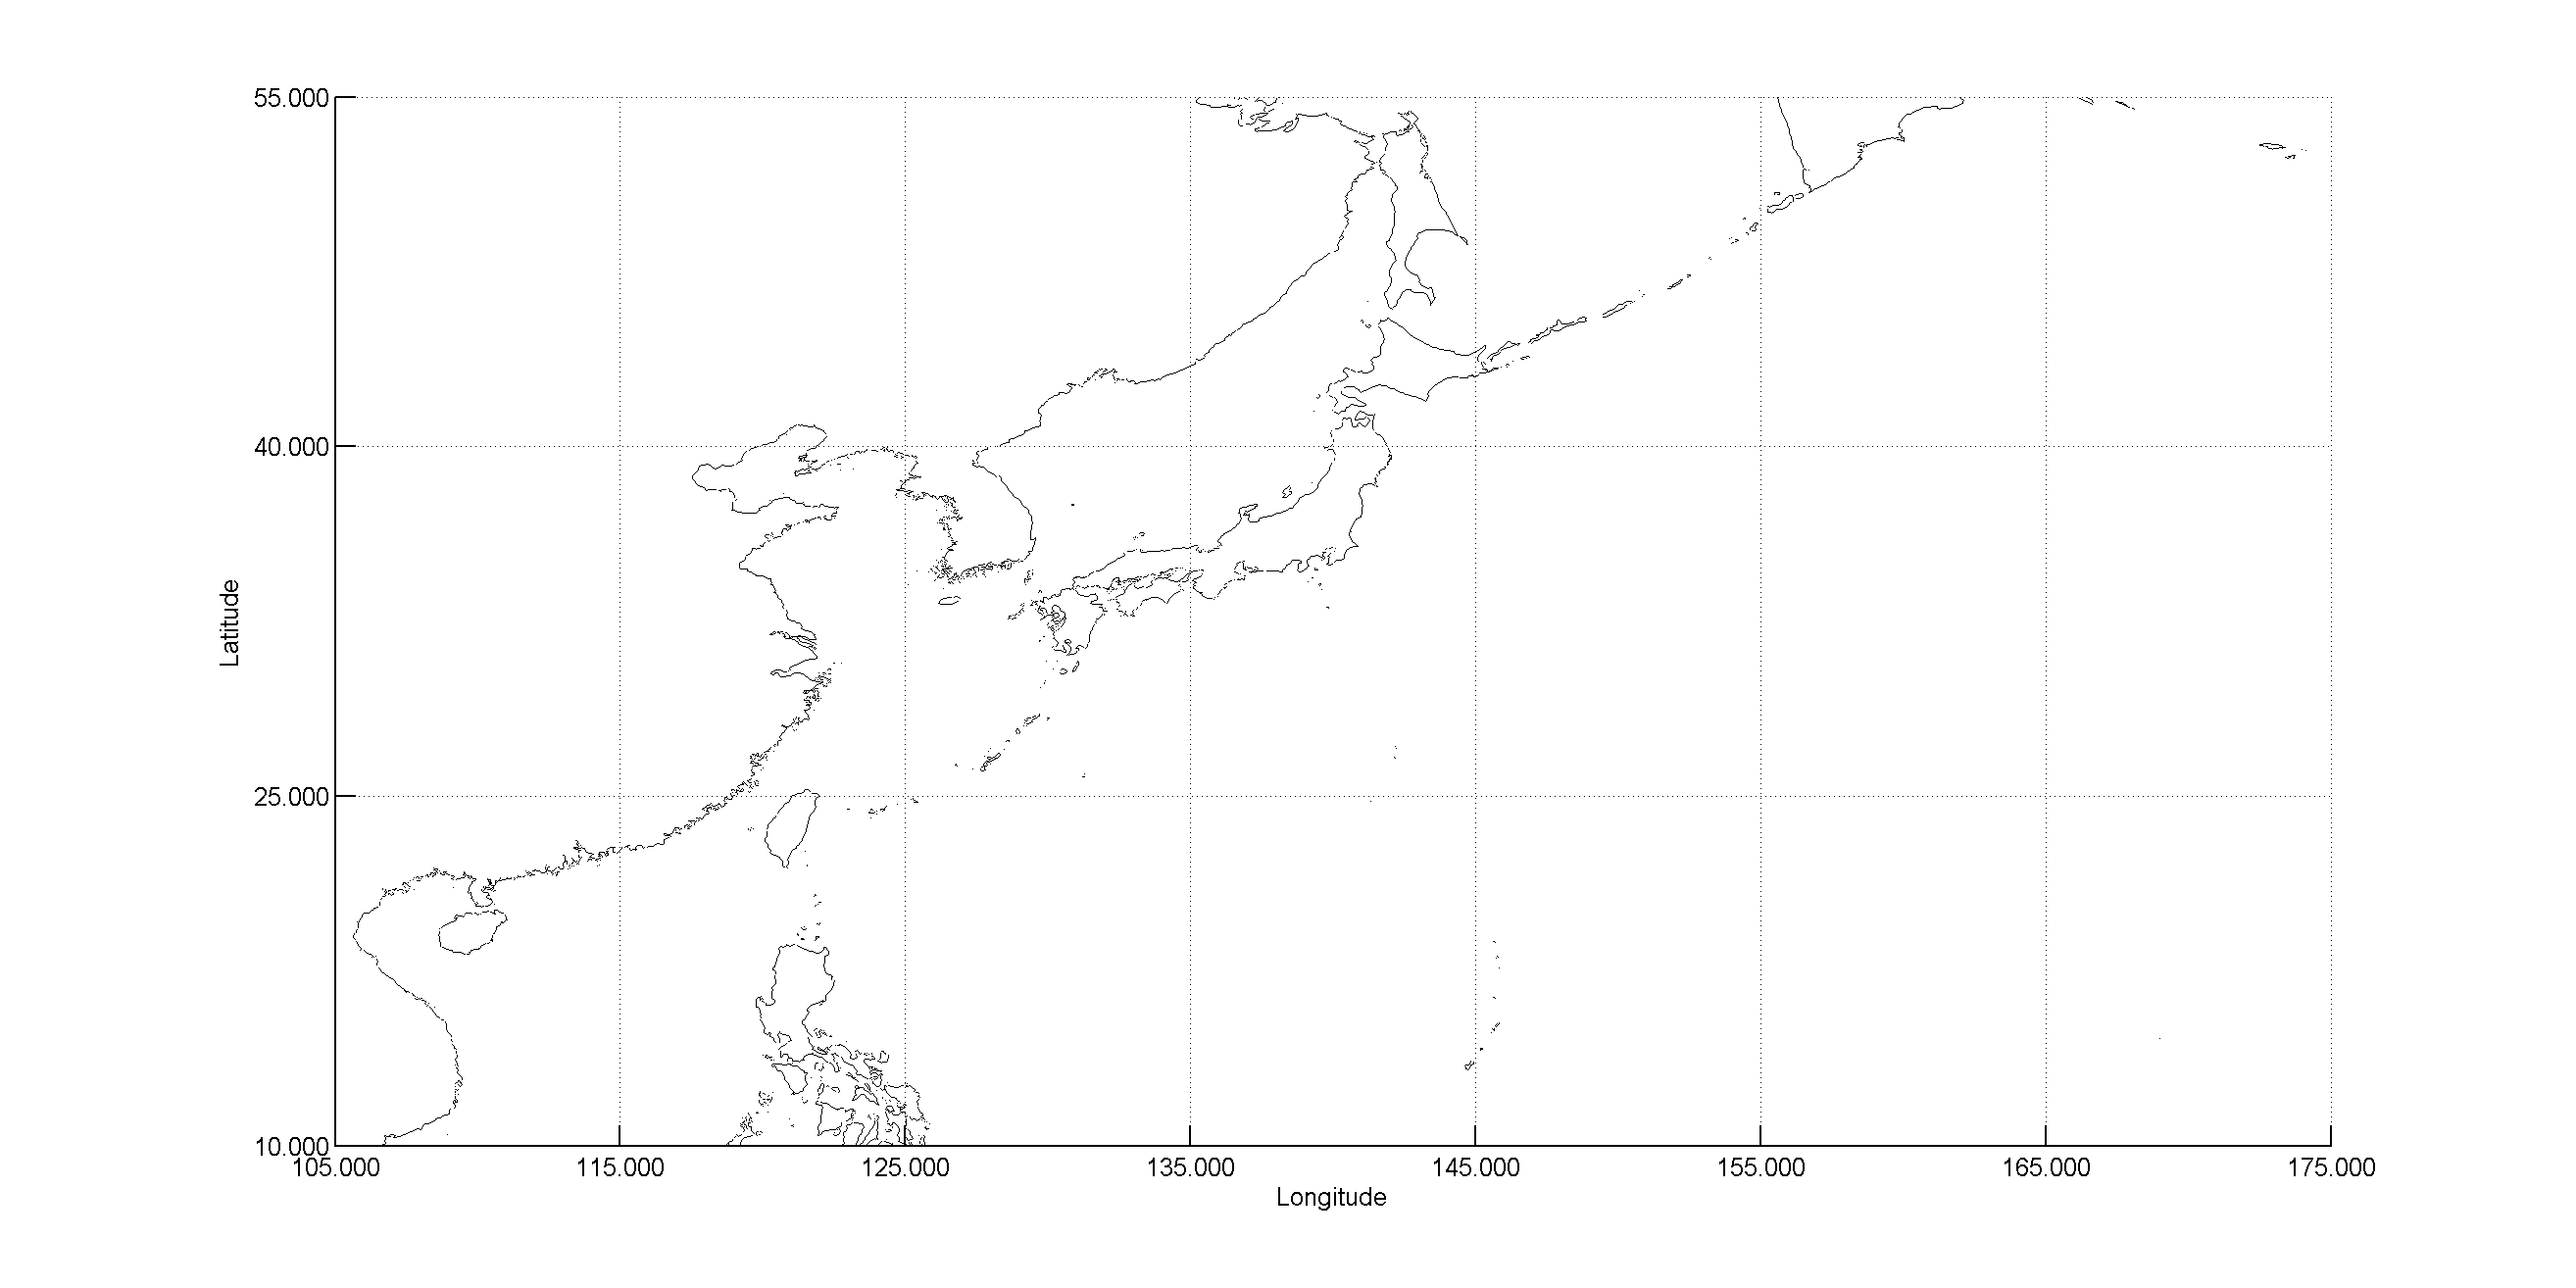 CYCLE_204 - Japan Ascending passes